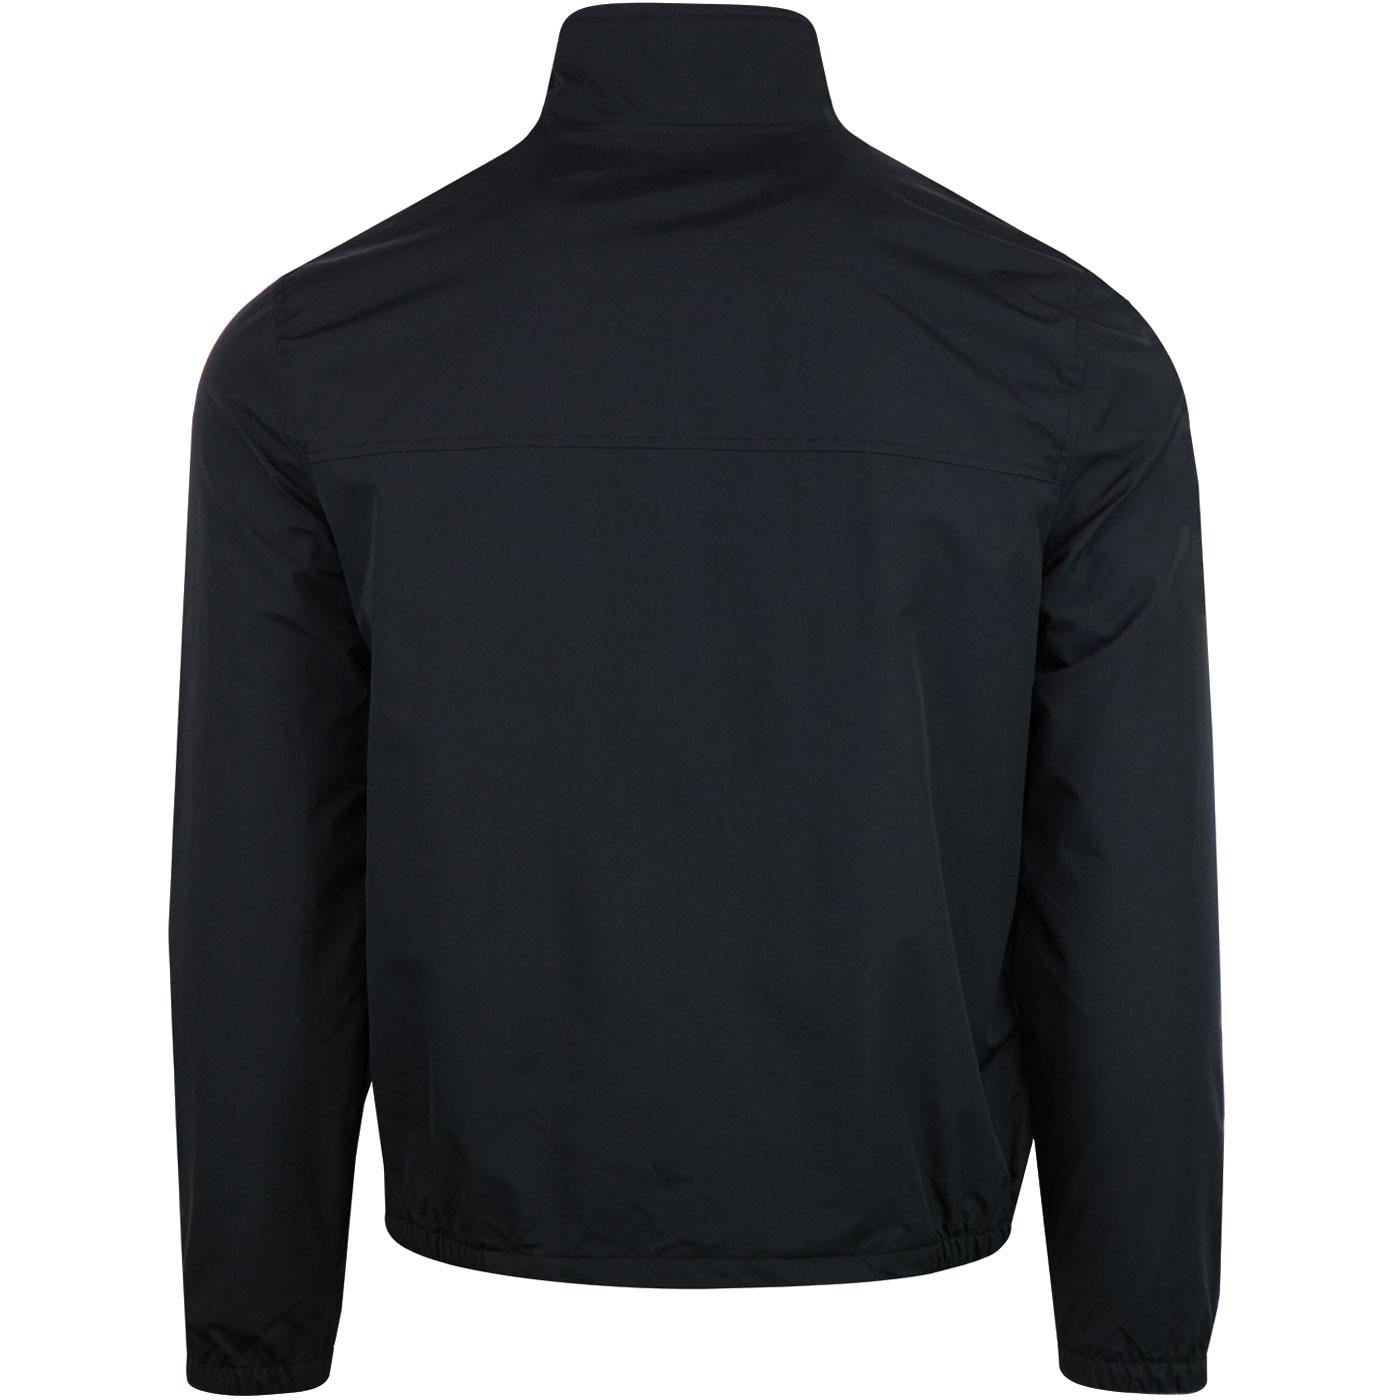 ORIGINAL PENGUIN Men's Retro Windcheater Jacket in Black